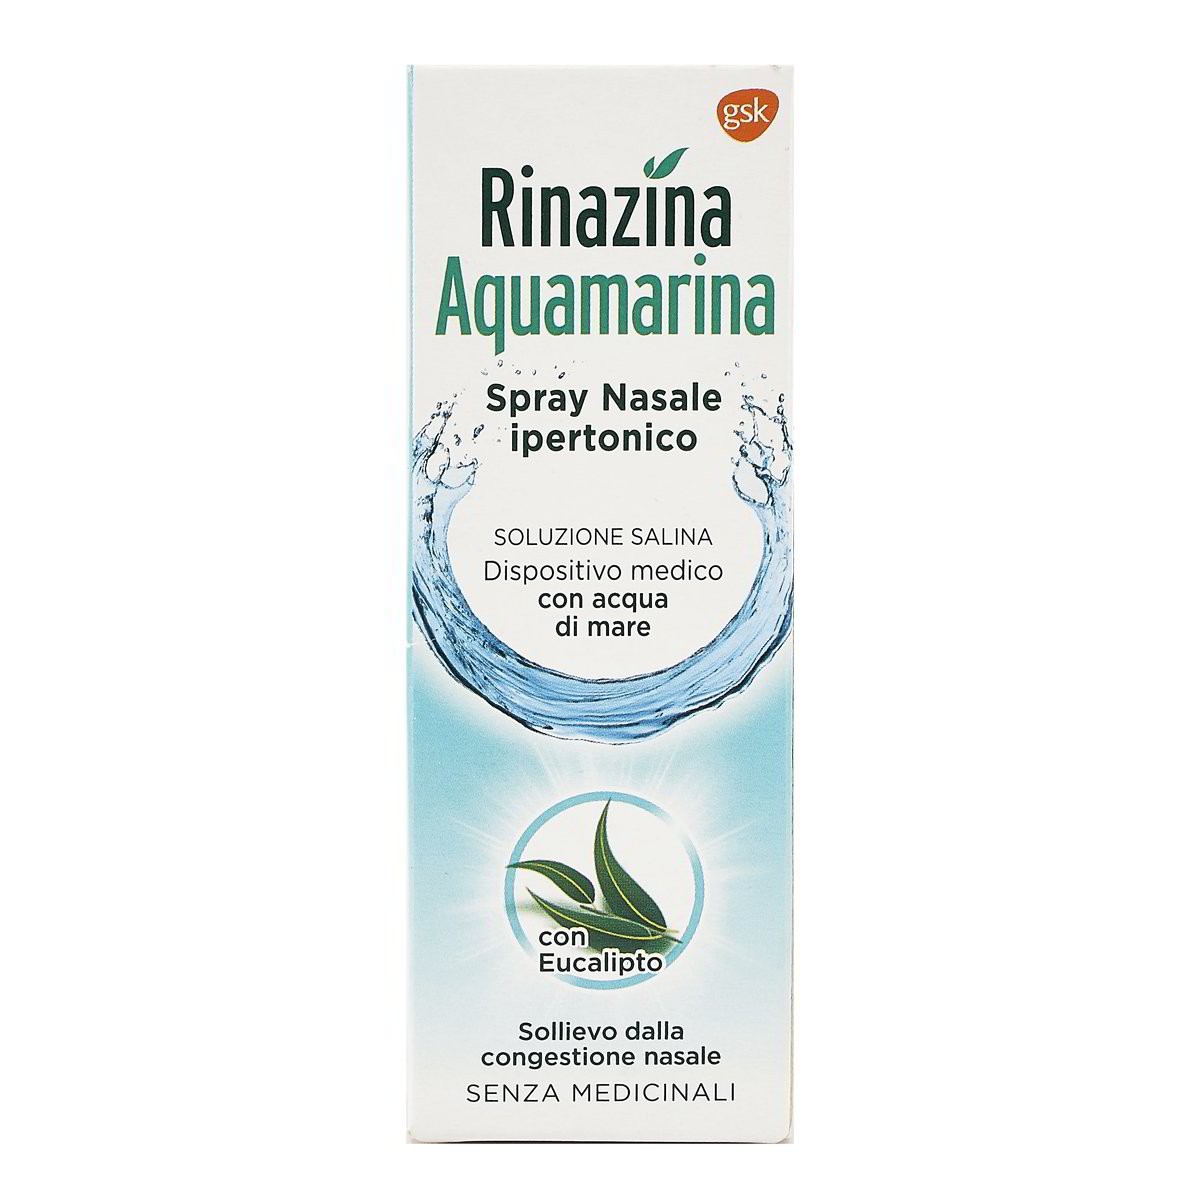 Rinazina Acquamarina Spray nasale ipertonico